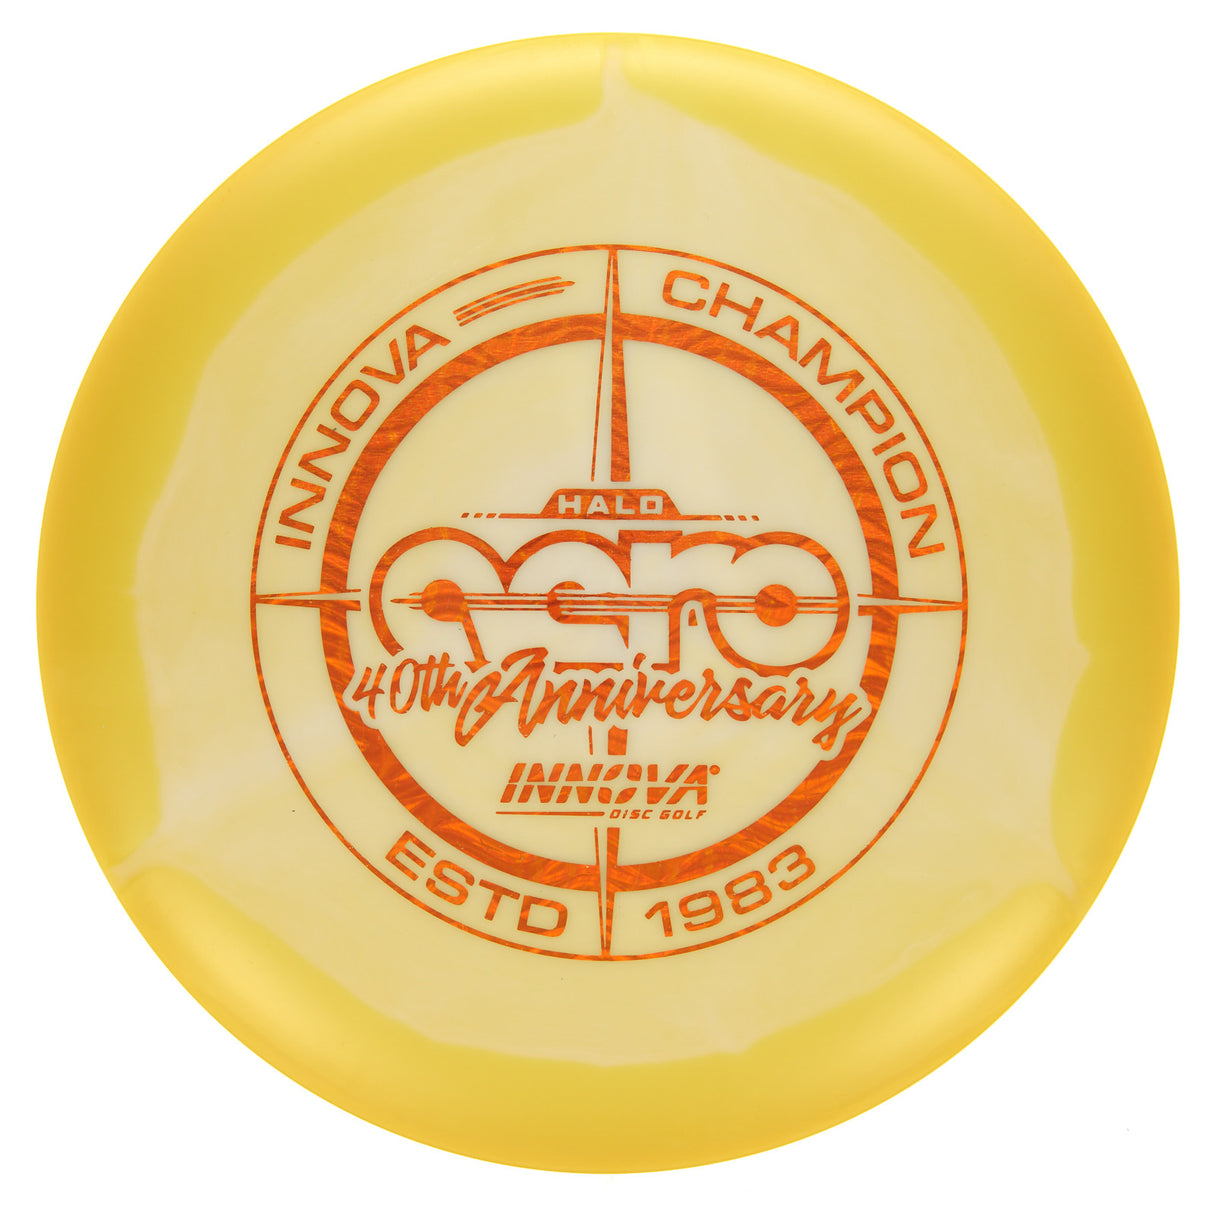 Innova Aero - 40th Anniversary Stamp Halo Star 181g | Style 0004